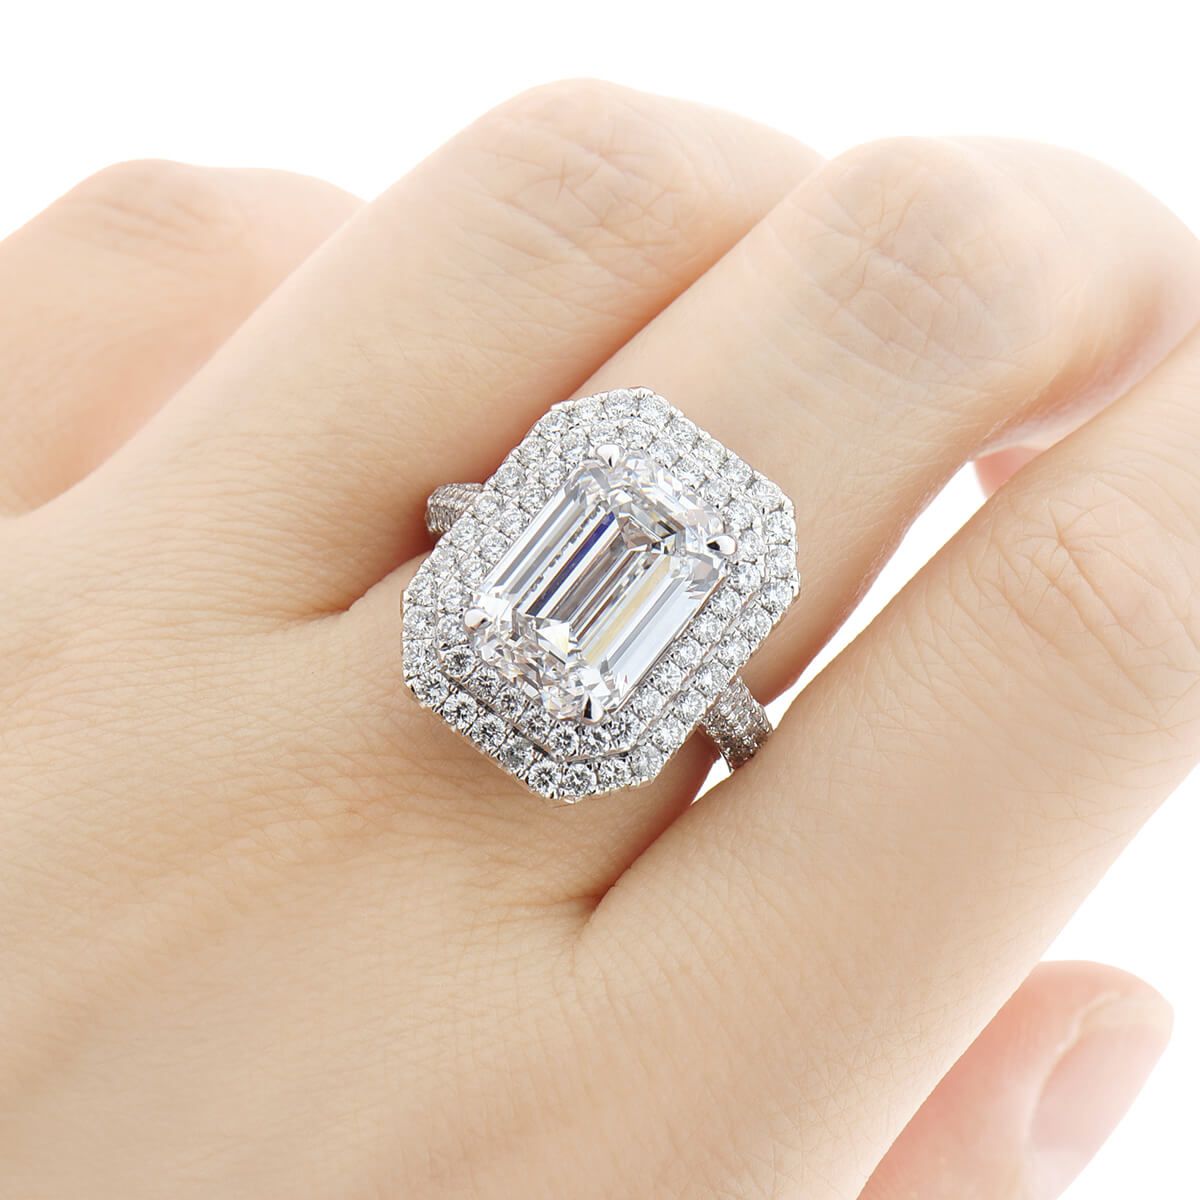  White Diamond Ring, 7.78 Ct. TW, Emerald shape, GIA Certified, 2155170379